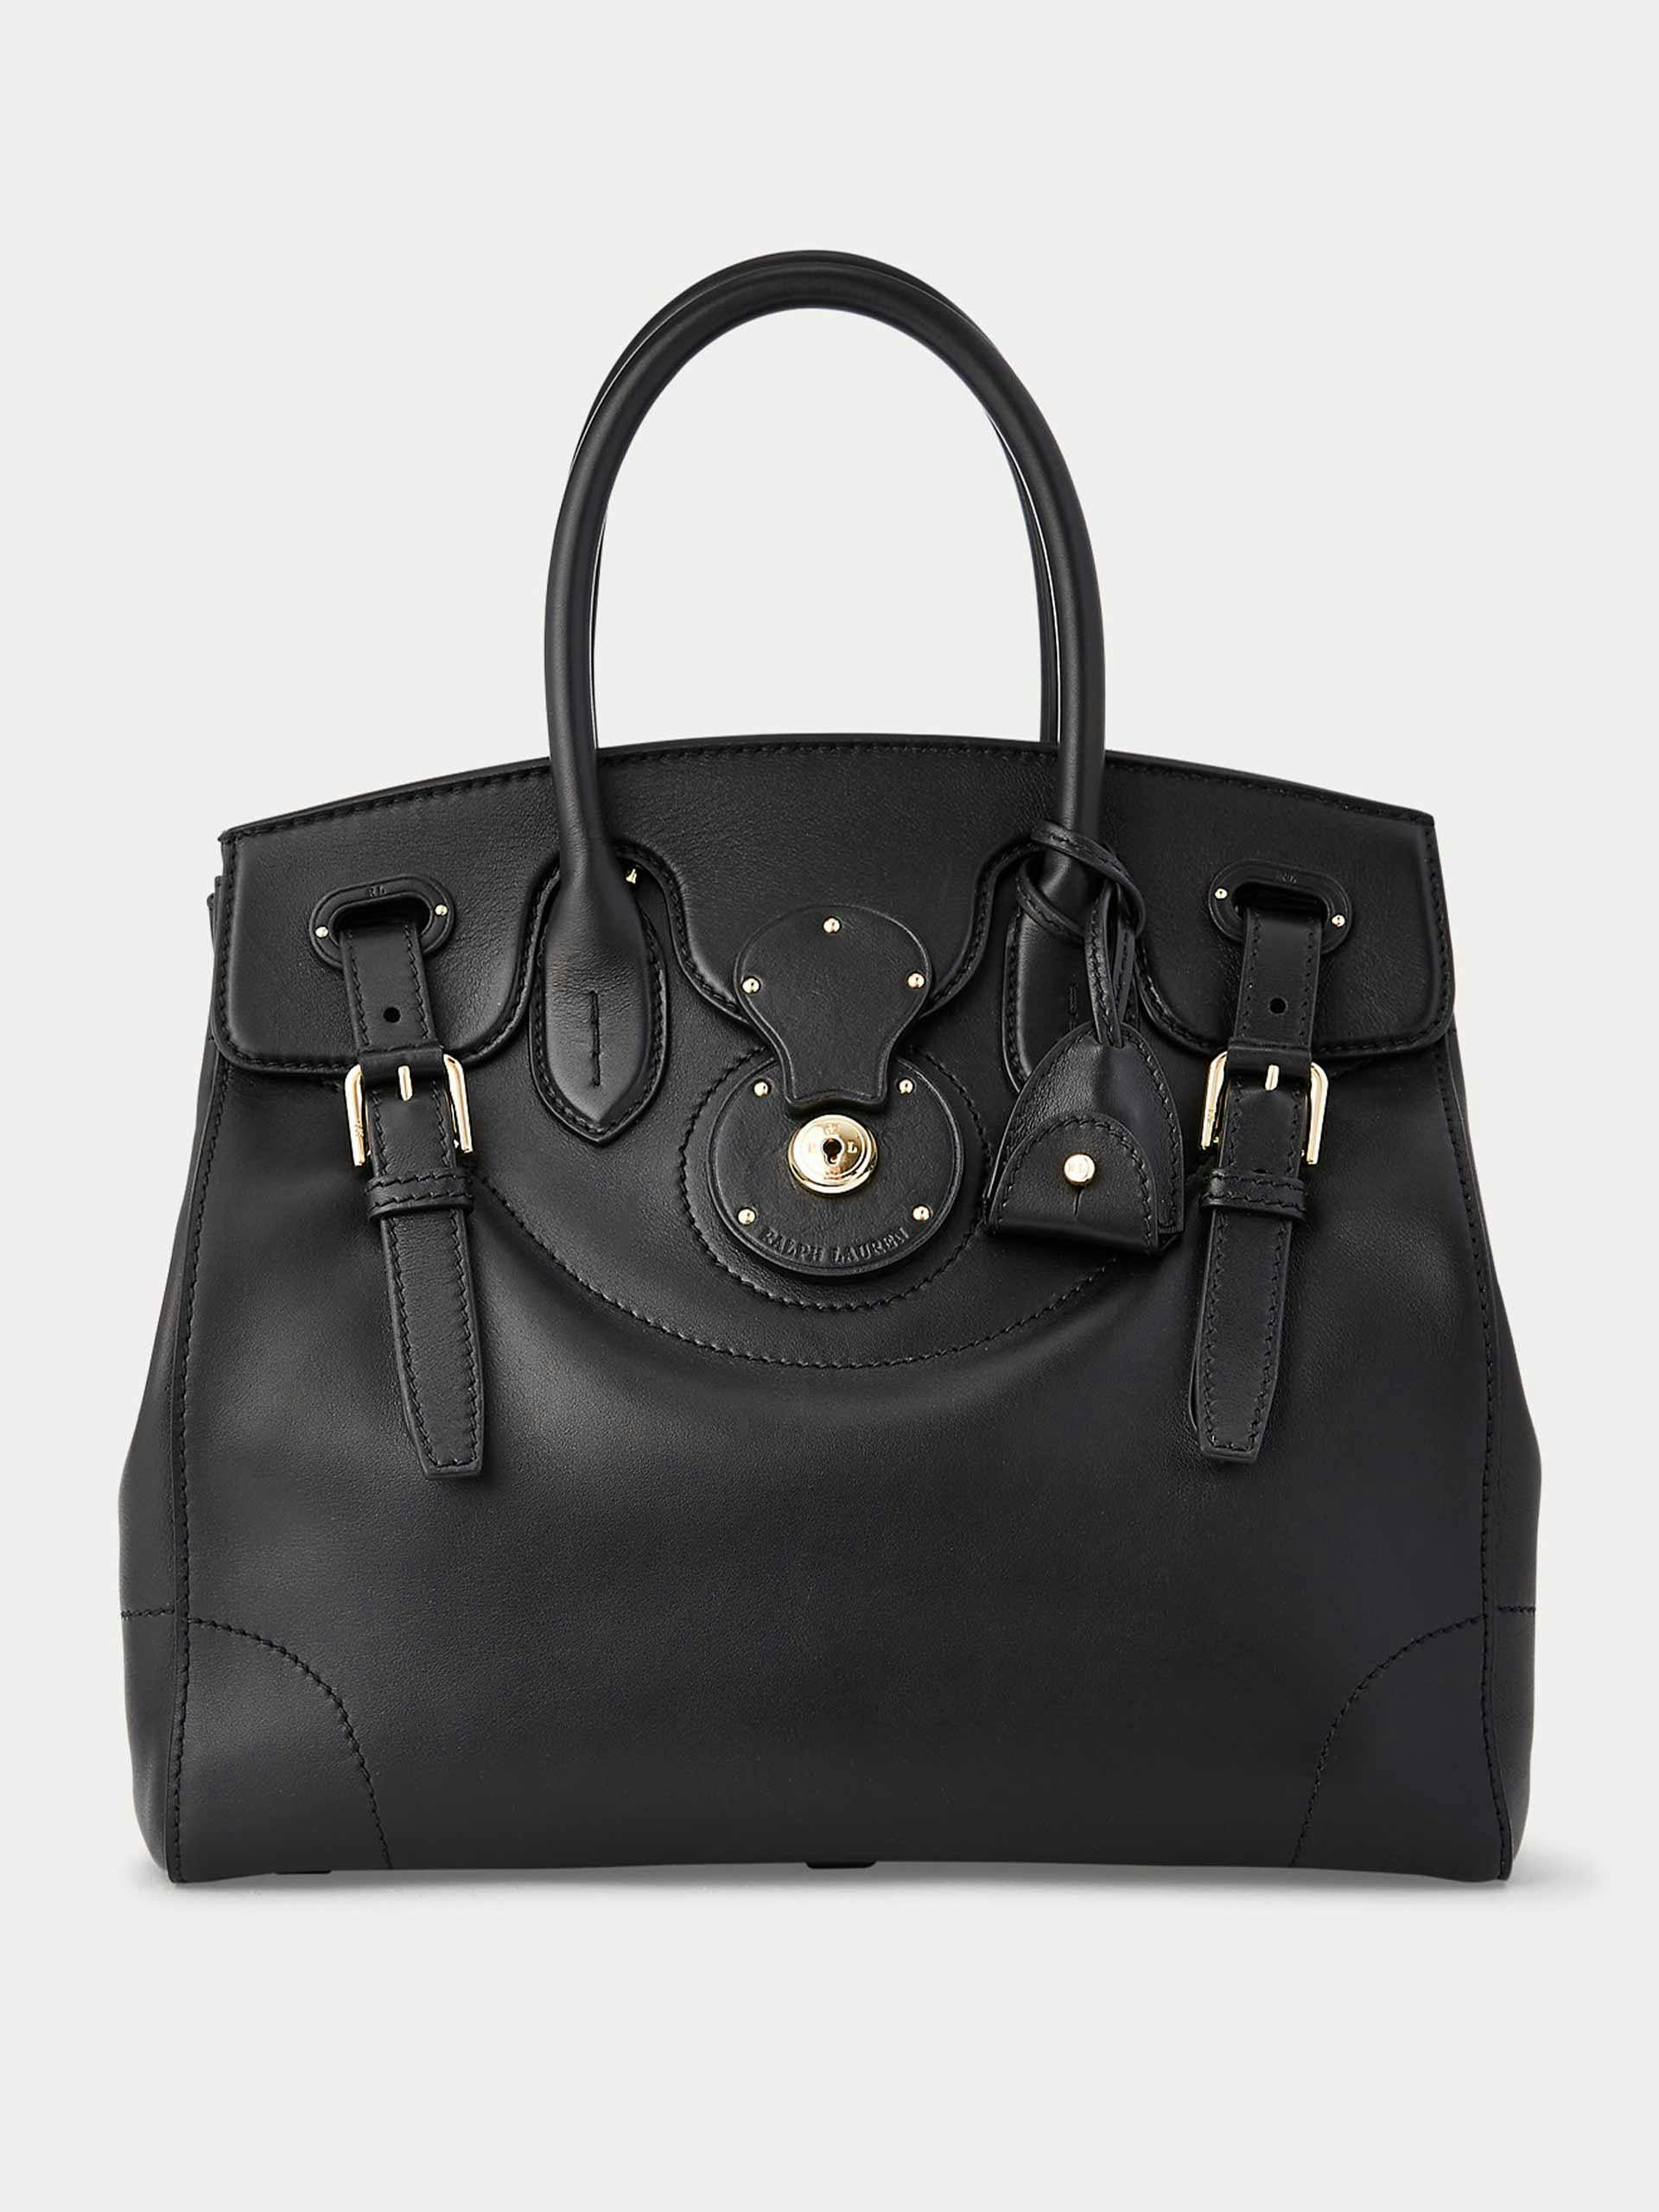 Black calfskin leather handbag